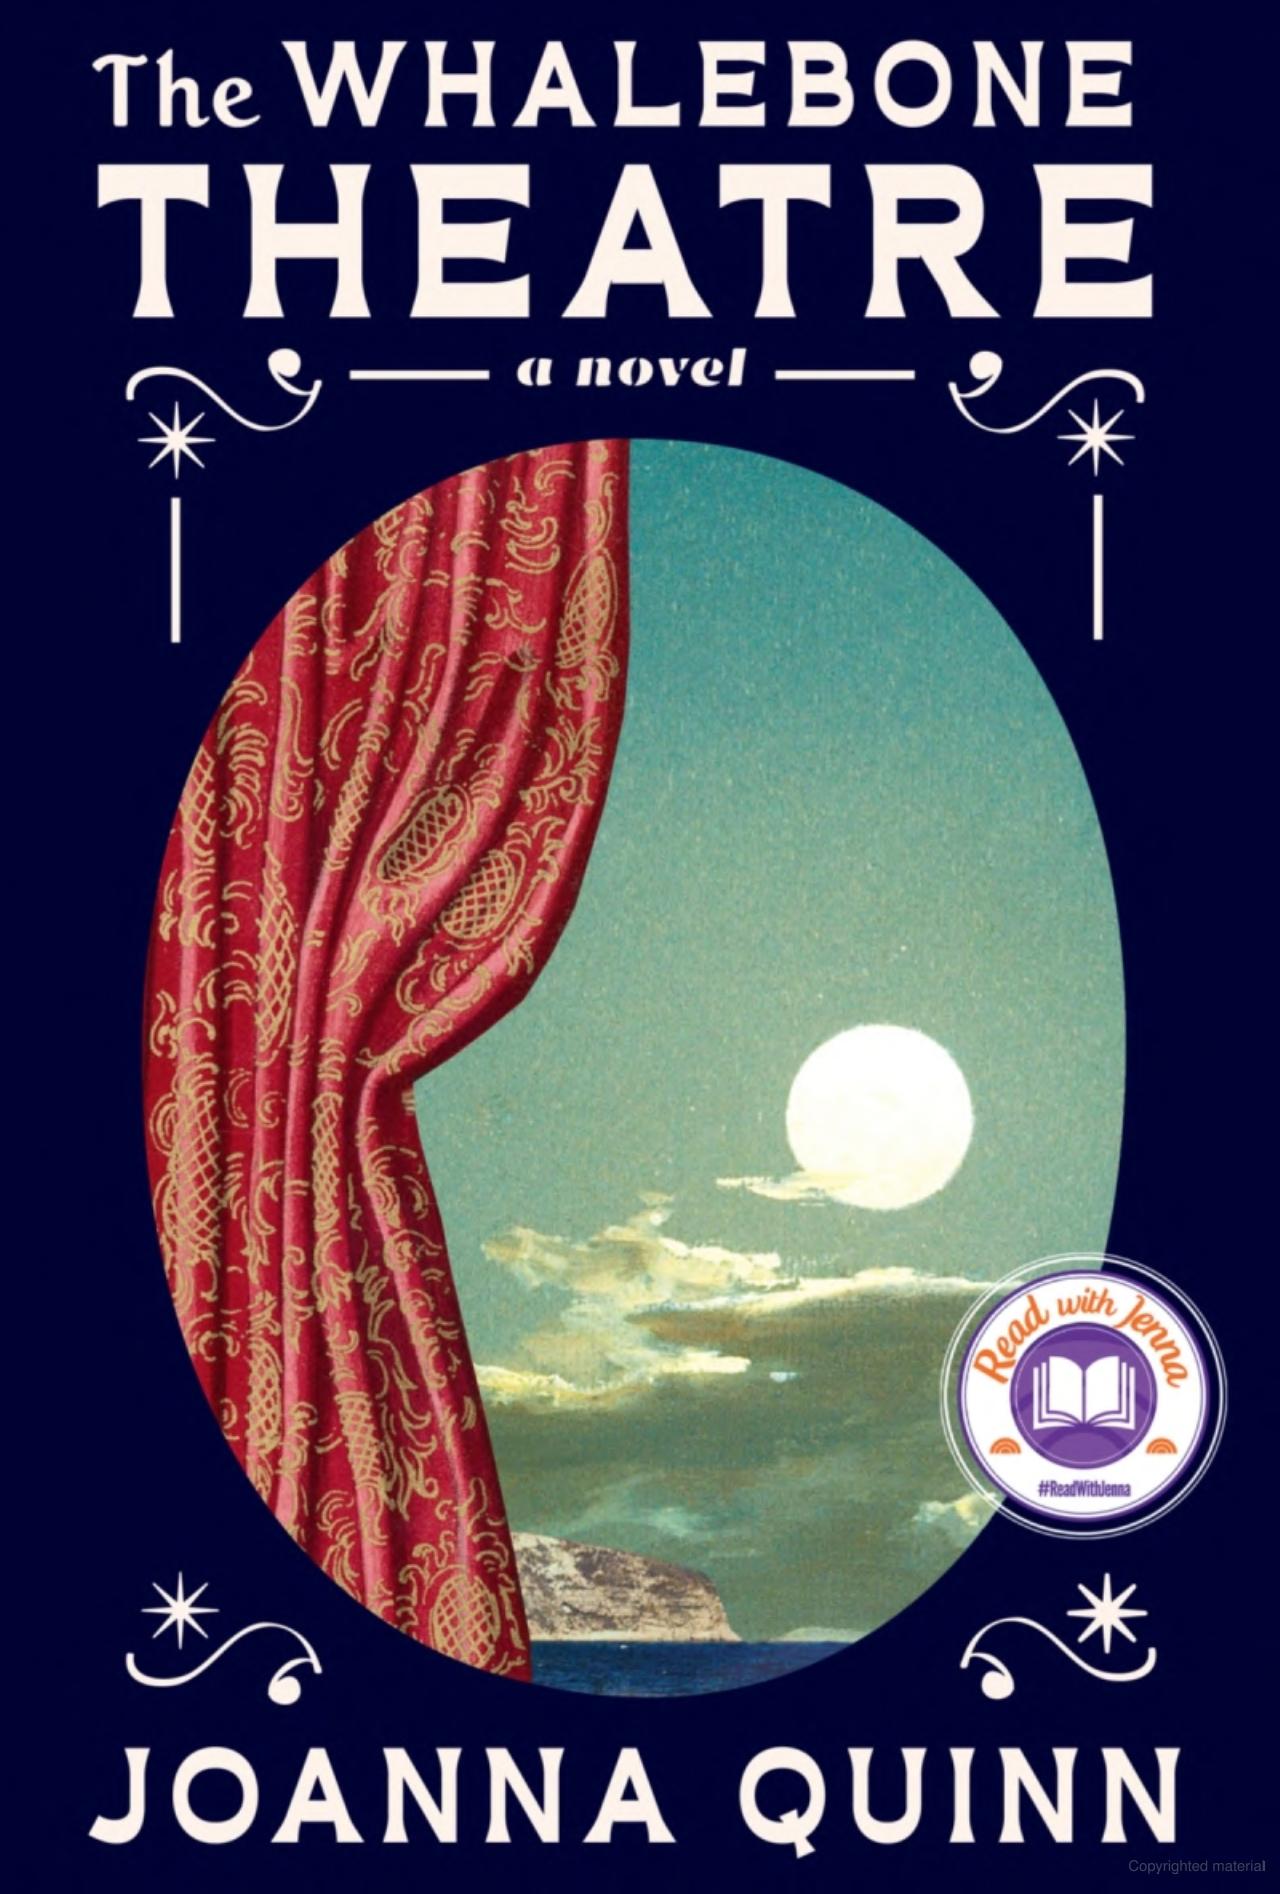 book cover for whalebone theatre